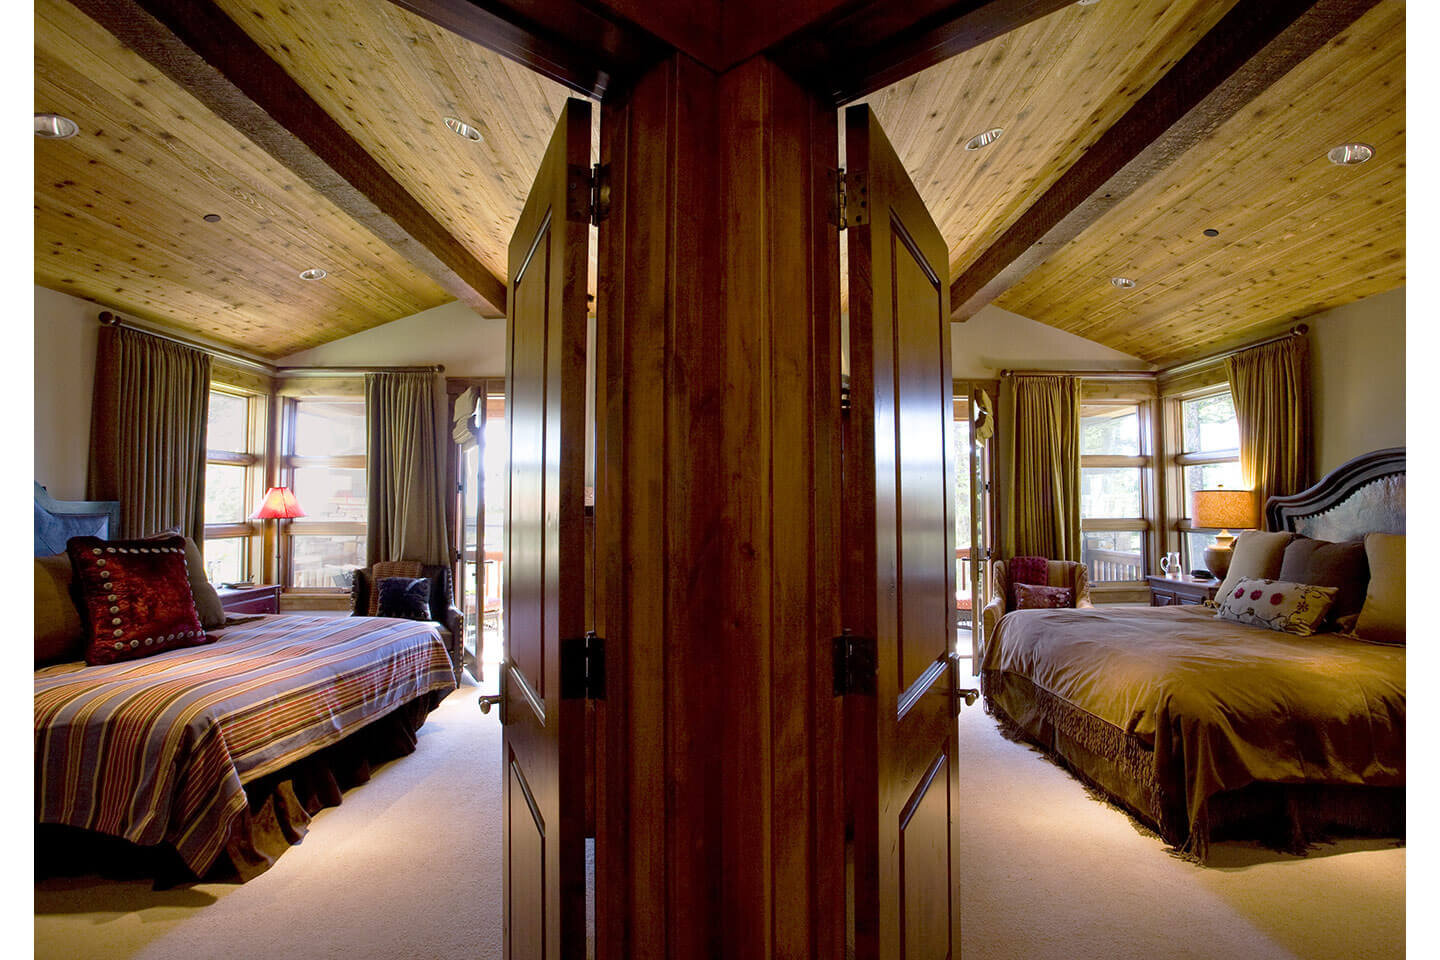 Two adjacent guest bedroom